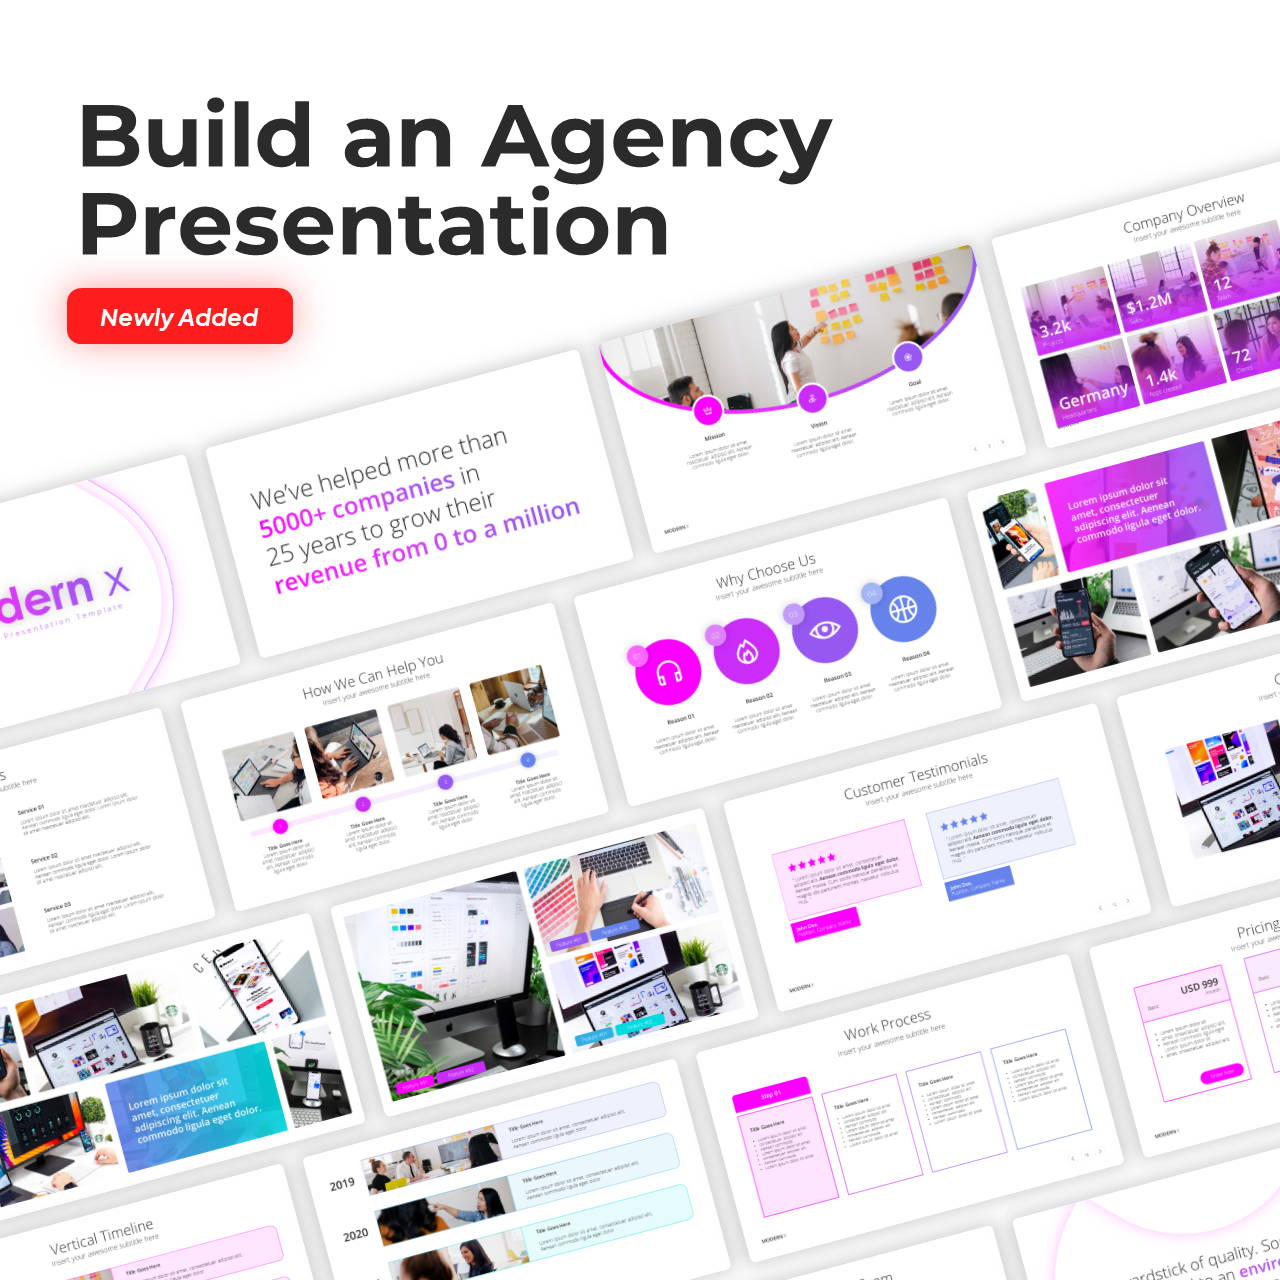 Modern X Agency Presentation Template 